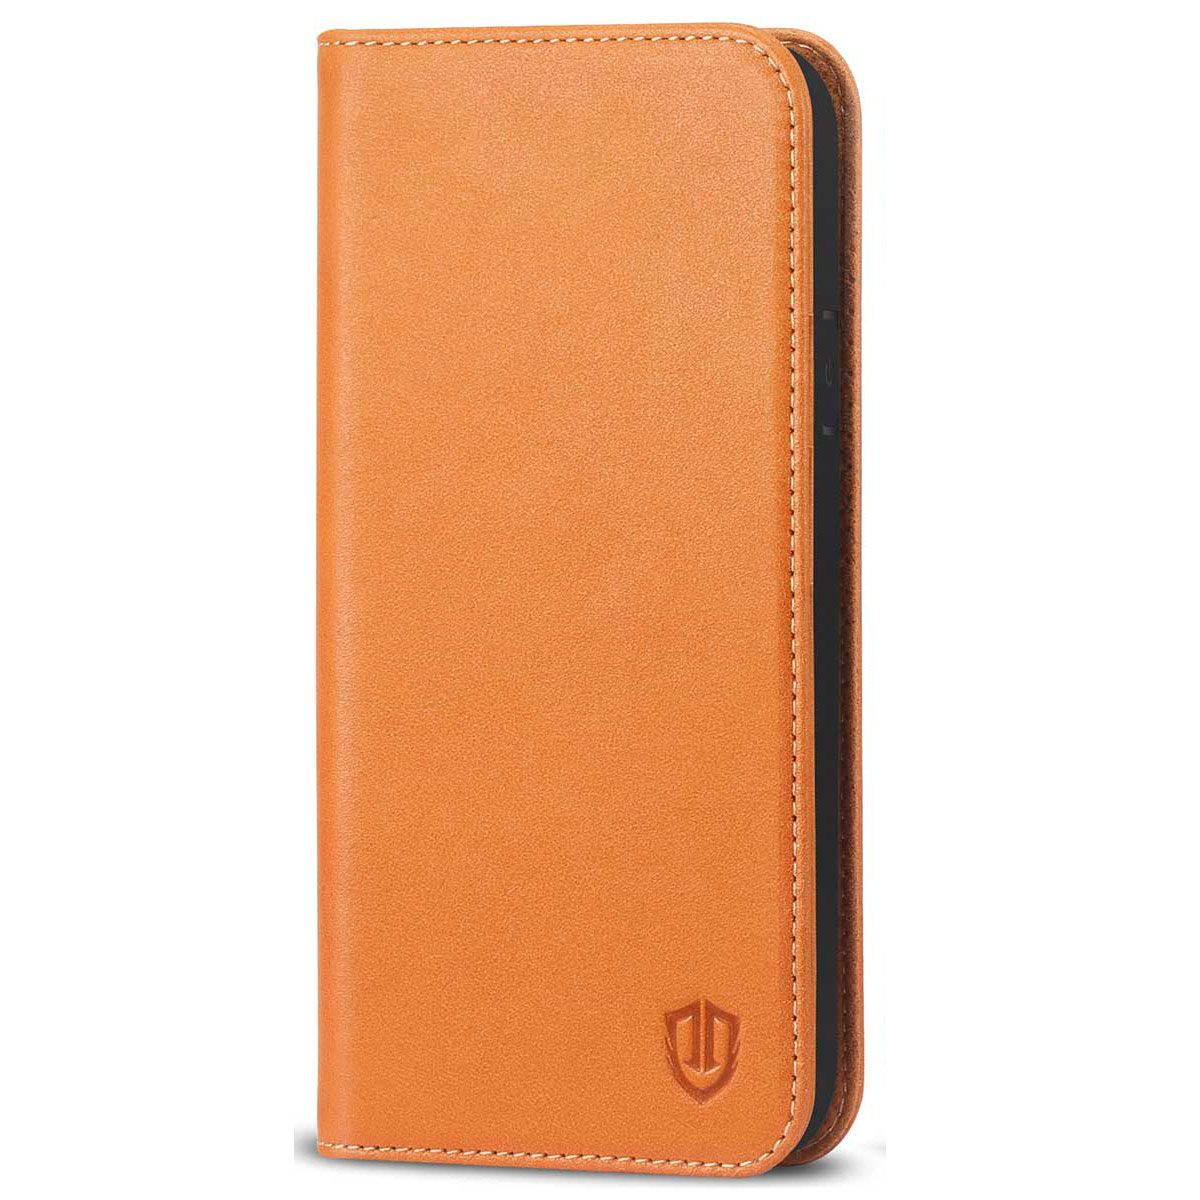 aanraken pensioen Manie SHIELDON iPhone 8 Plus Wallet Case - iPhone 8 Plus Genuine Leather  Kickstand Case